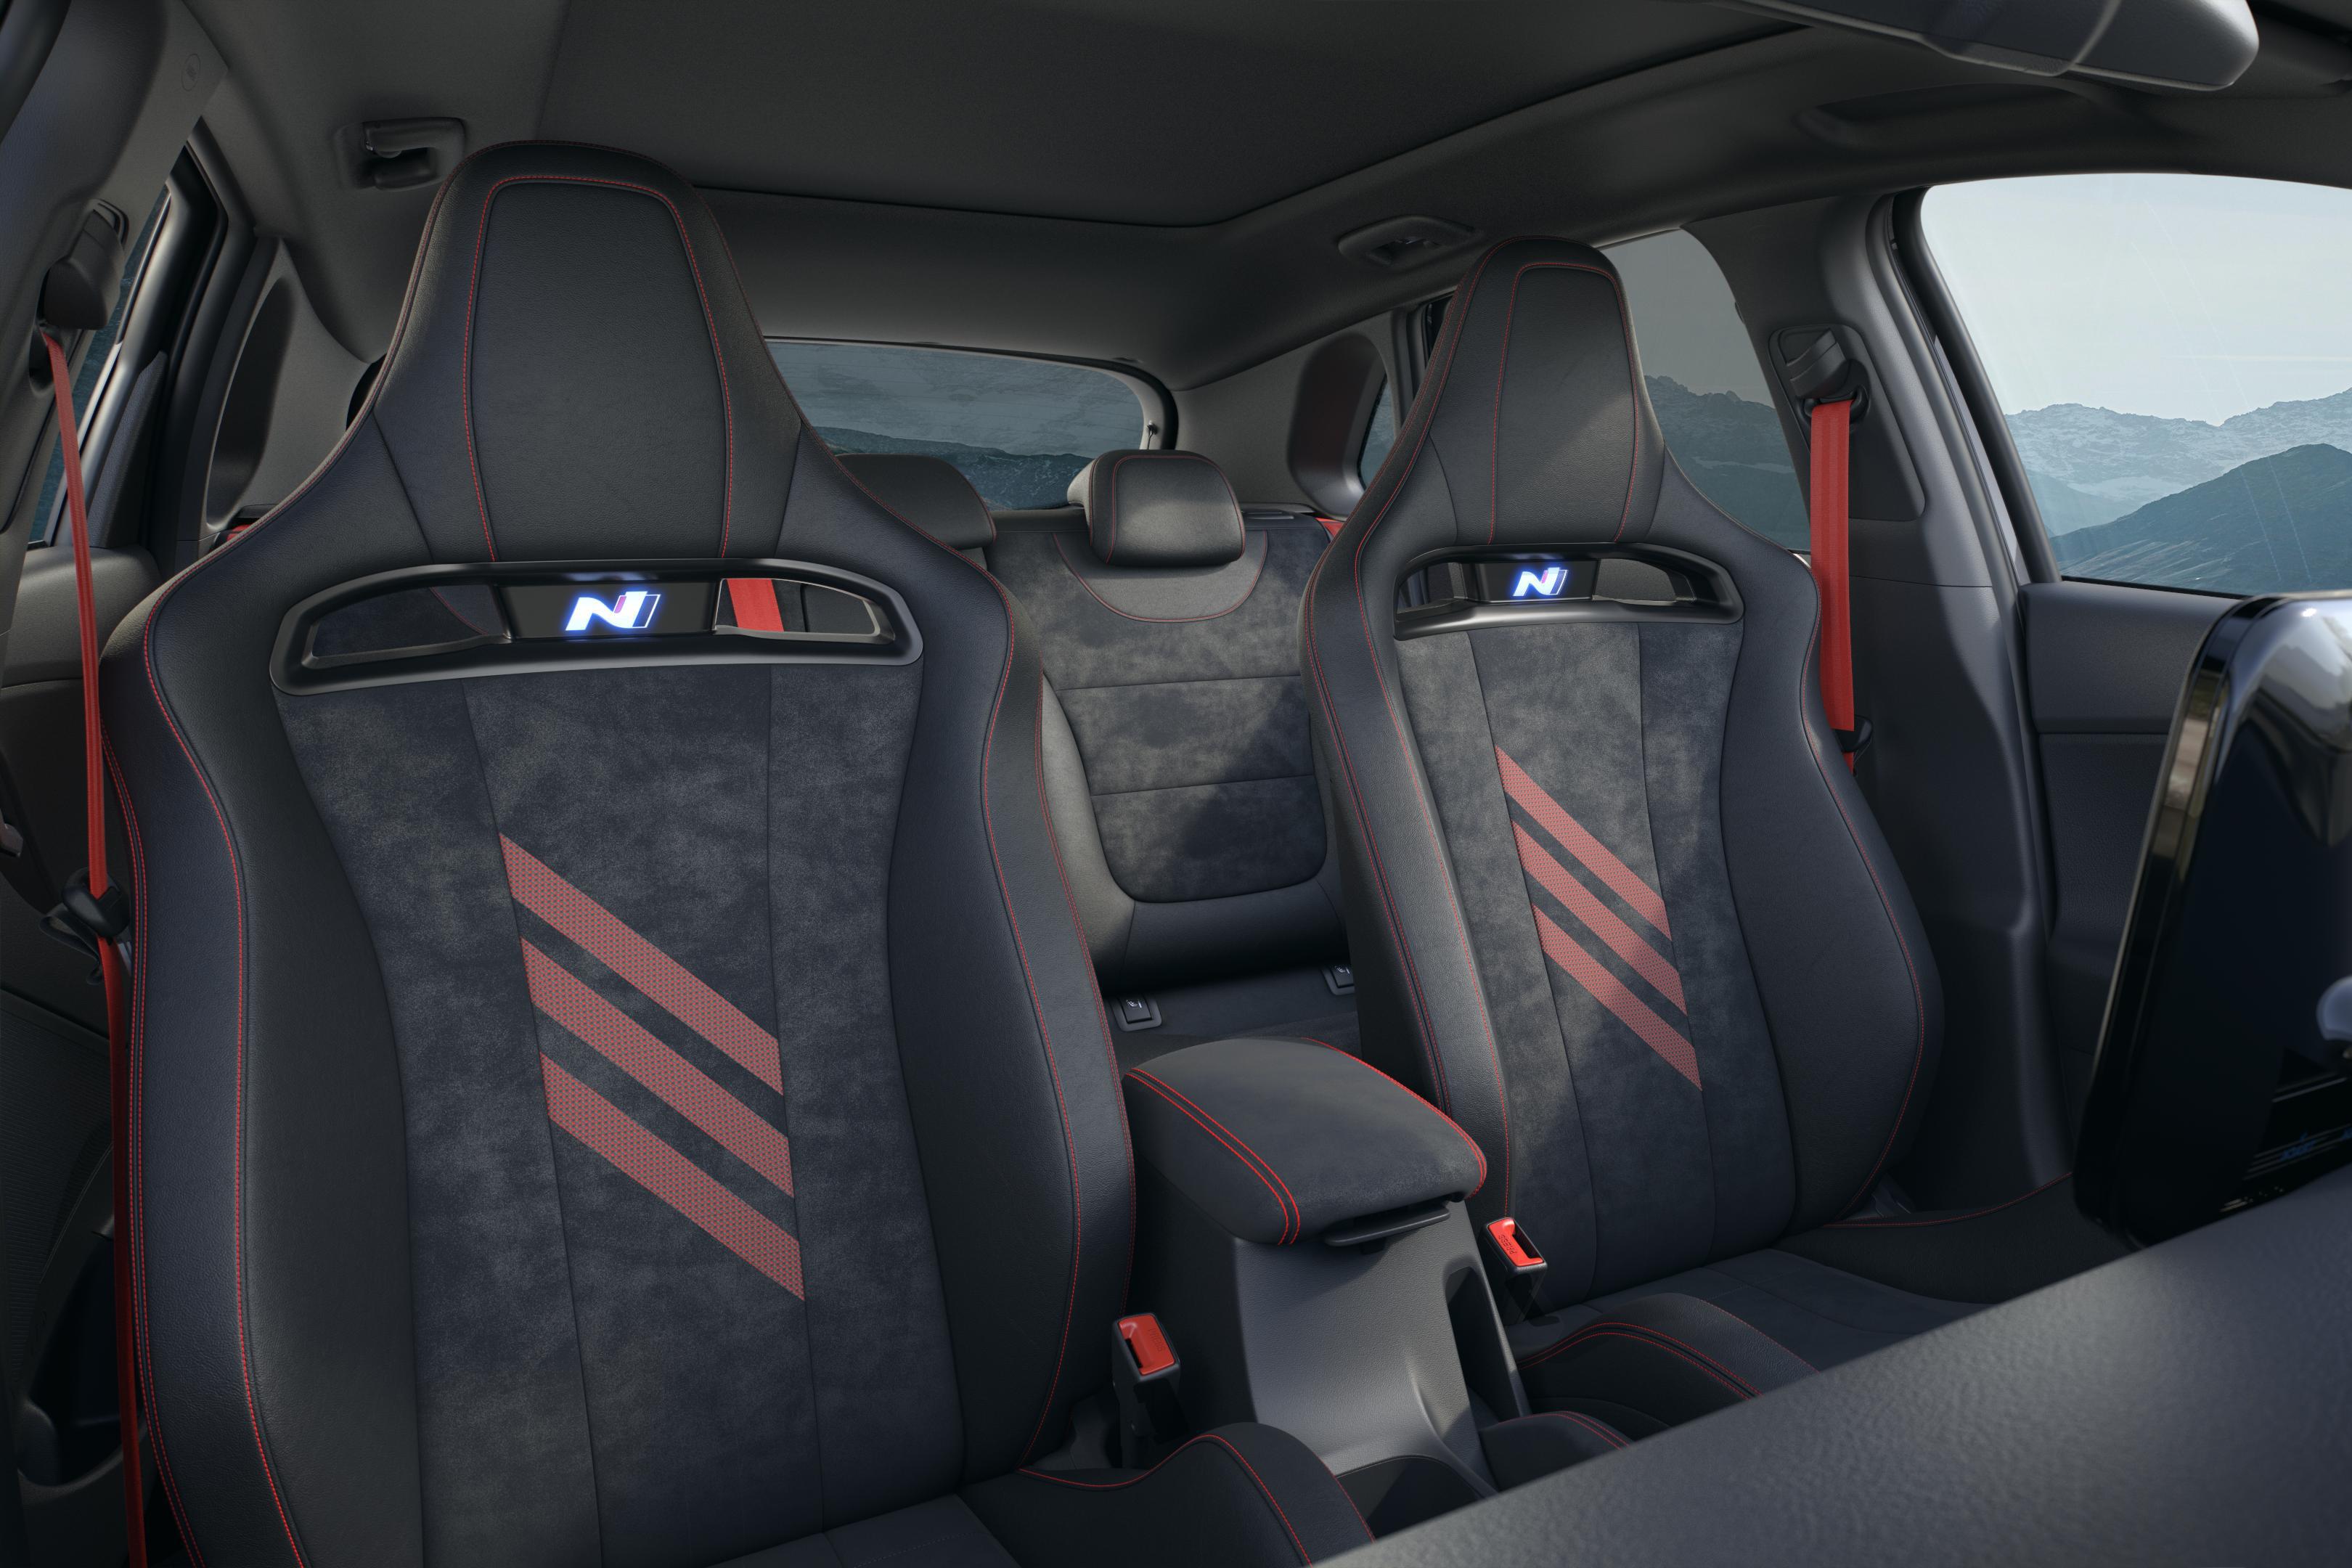 Hyundai i30 interior - Seats